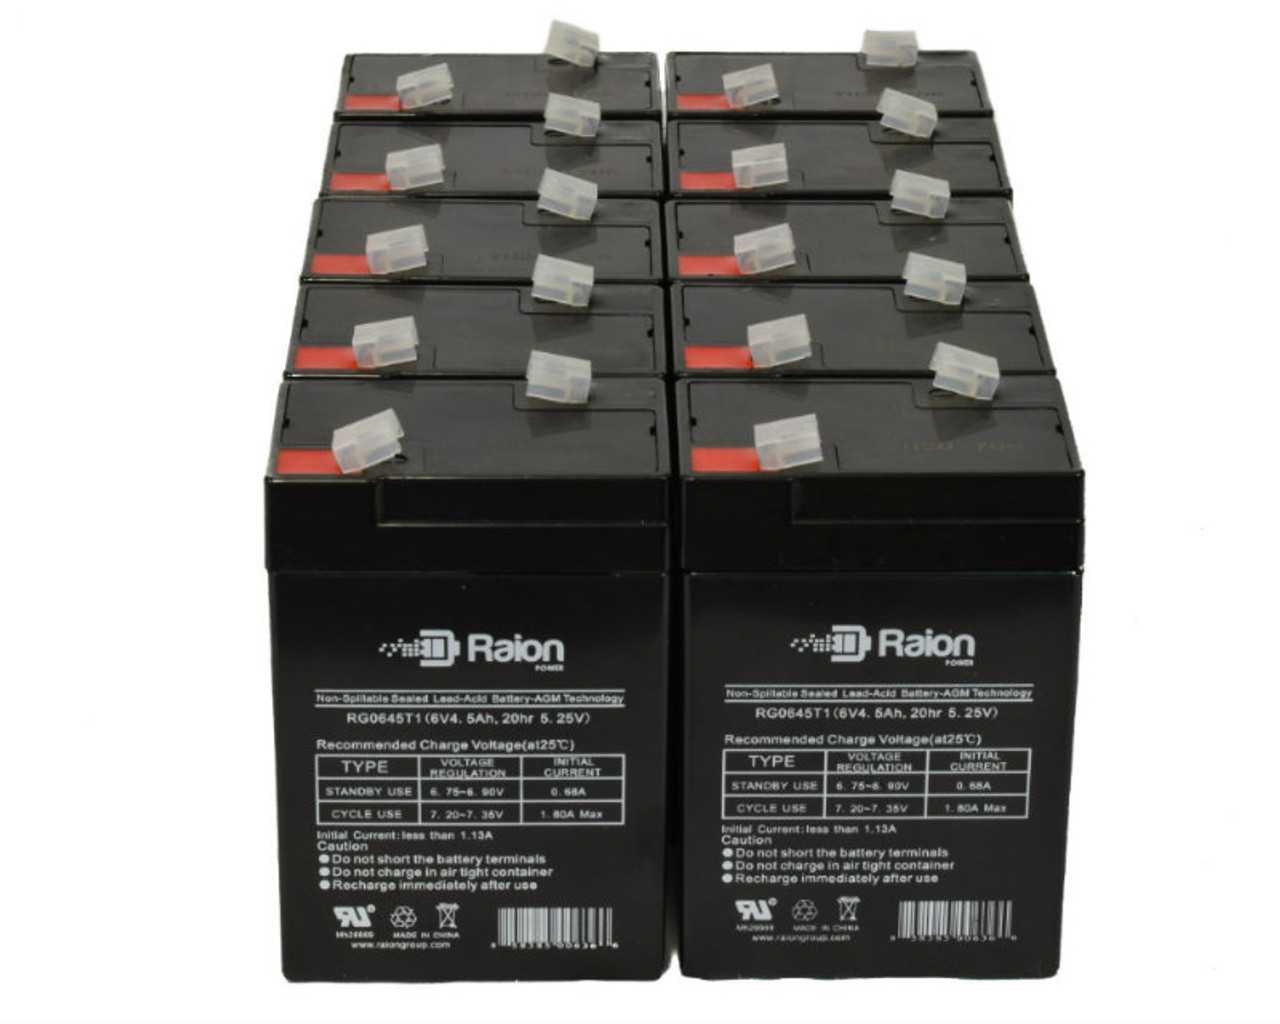 Raion Power 6 Volt 4.5Ah RG0645T1 Replacement Battery for Fengri 3-FM-5.0 - 10 Pack